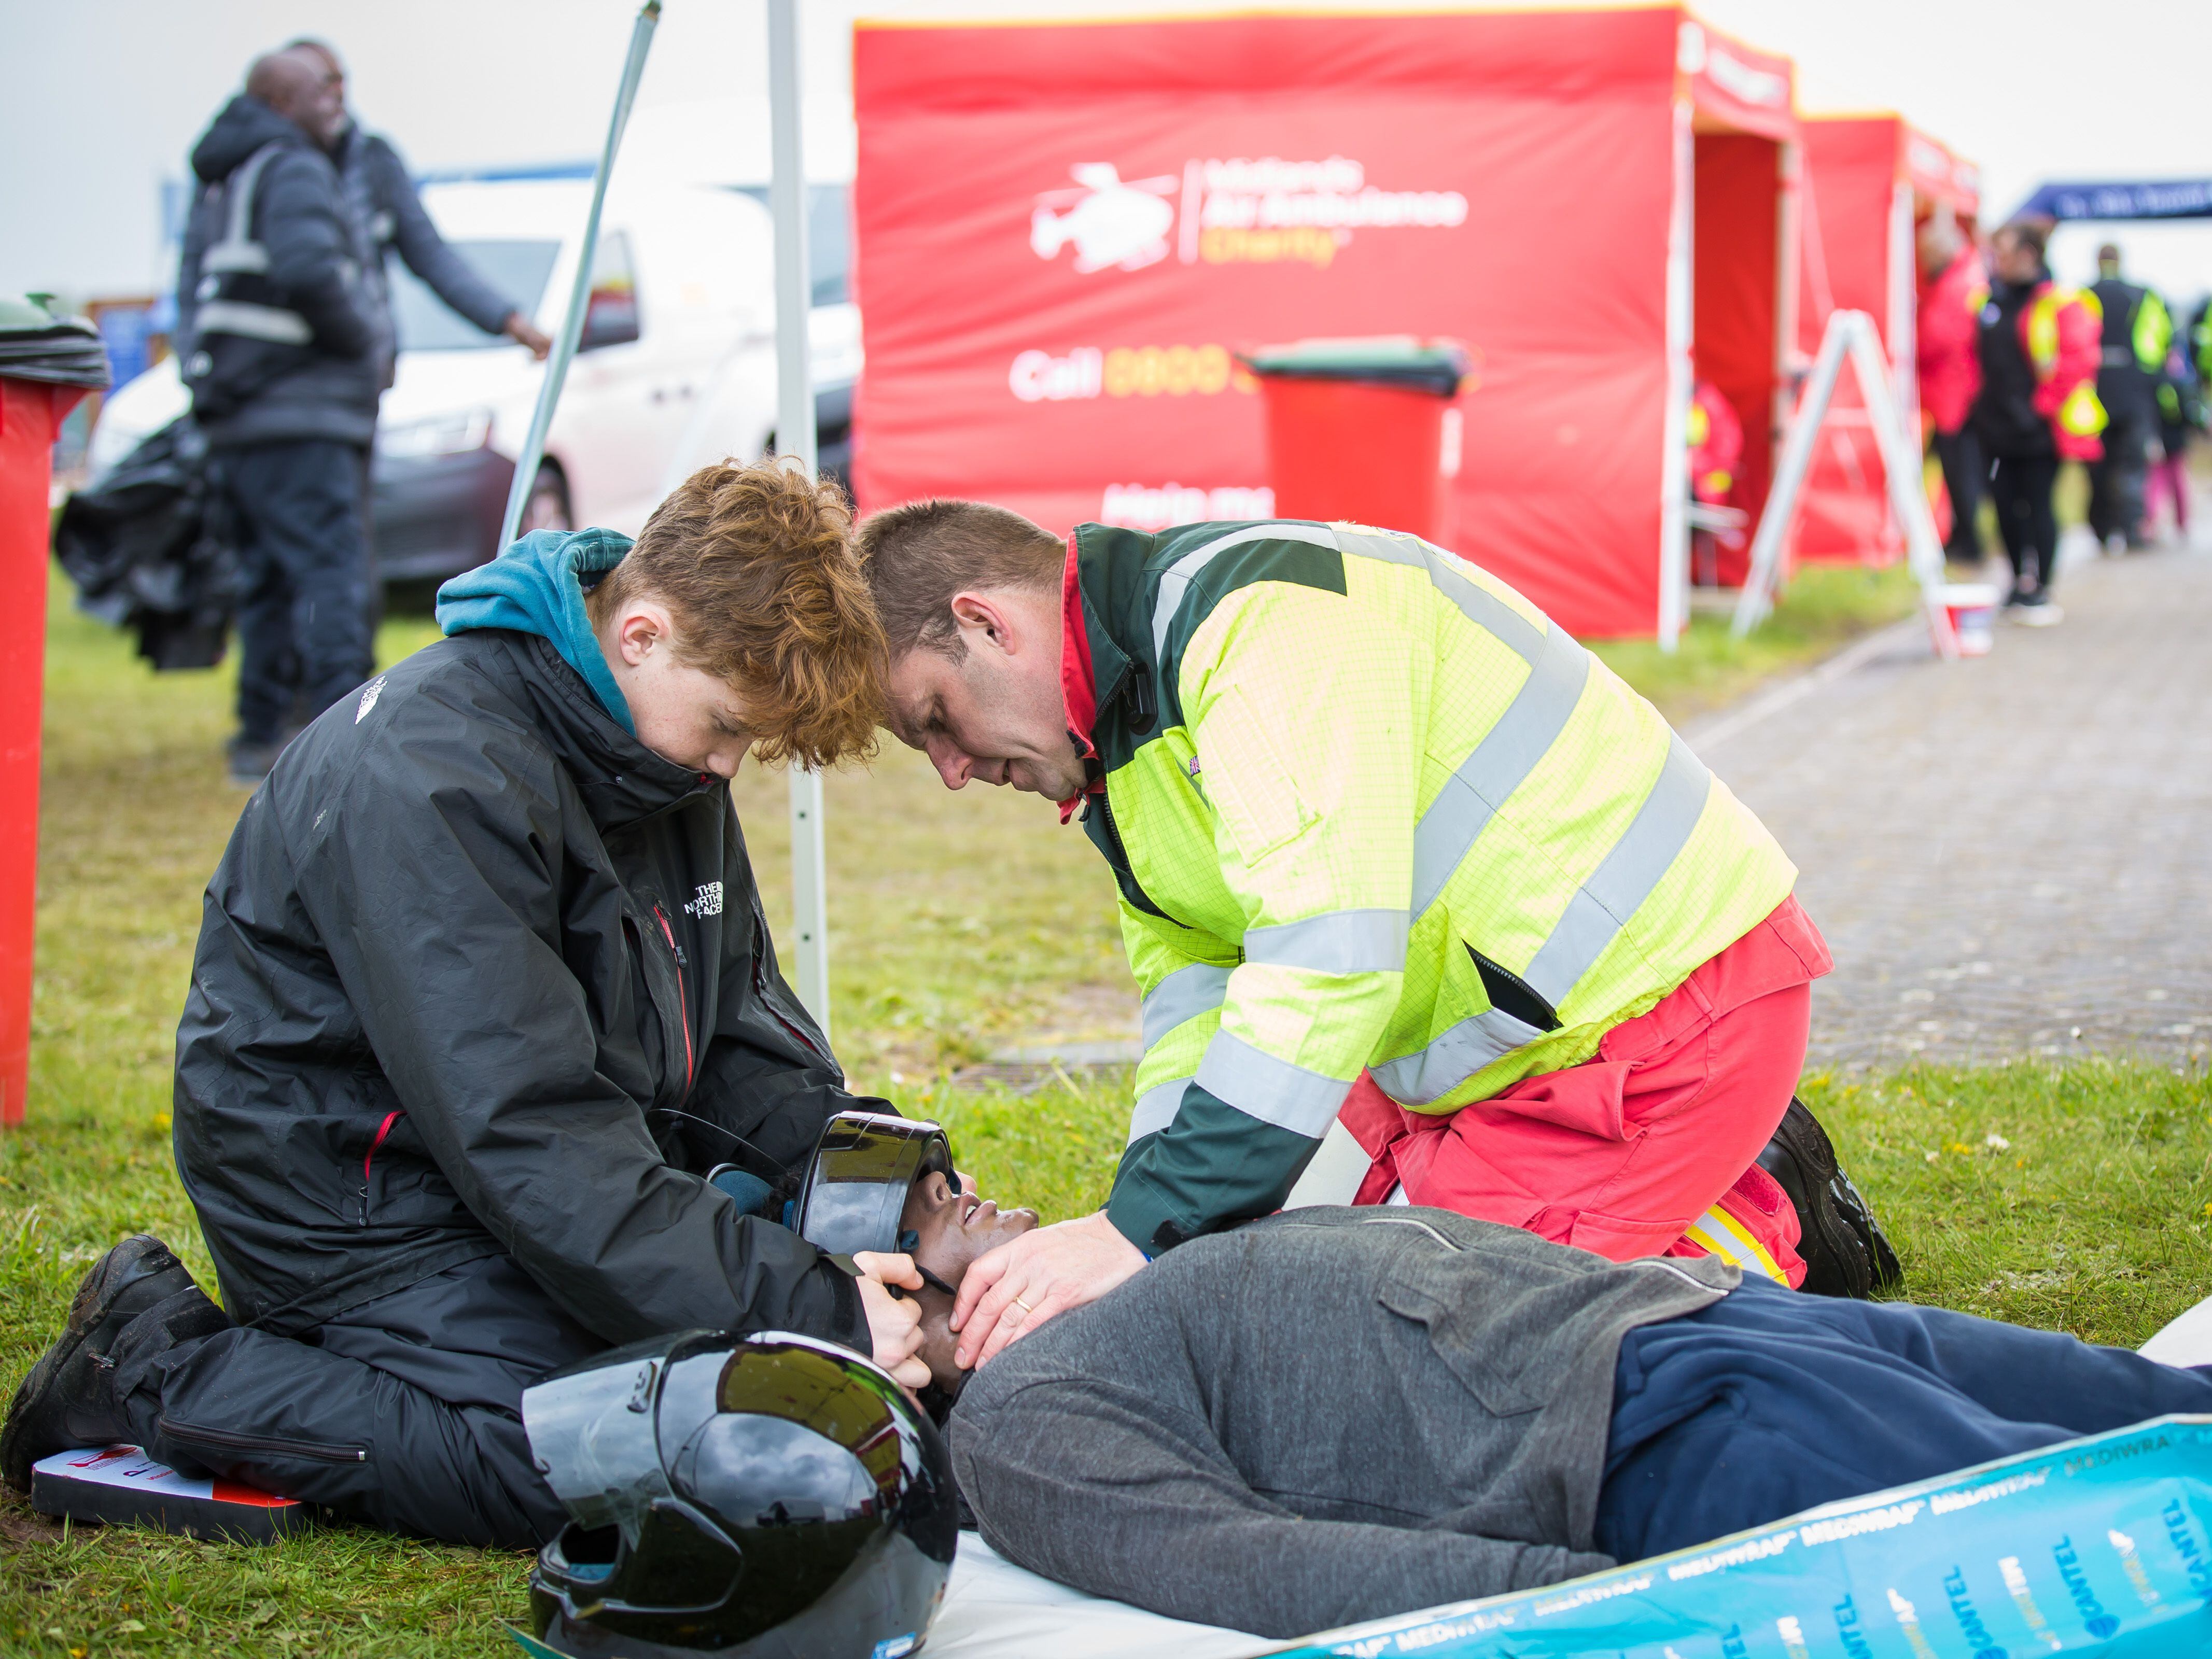 Air ambulance urges people to learn lifesaving skills